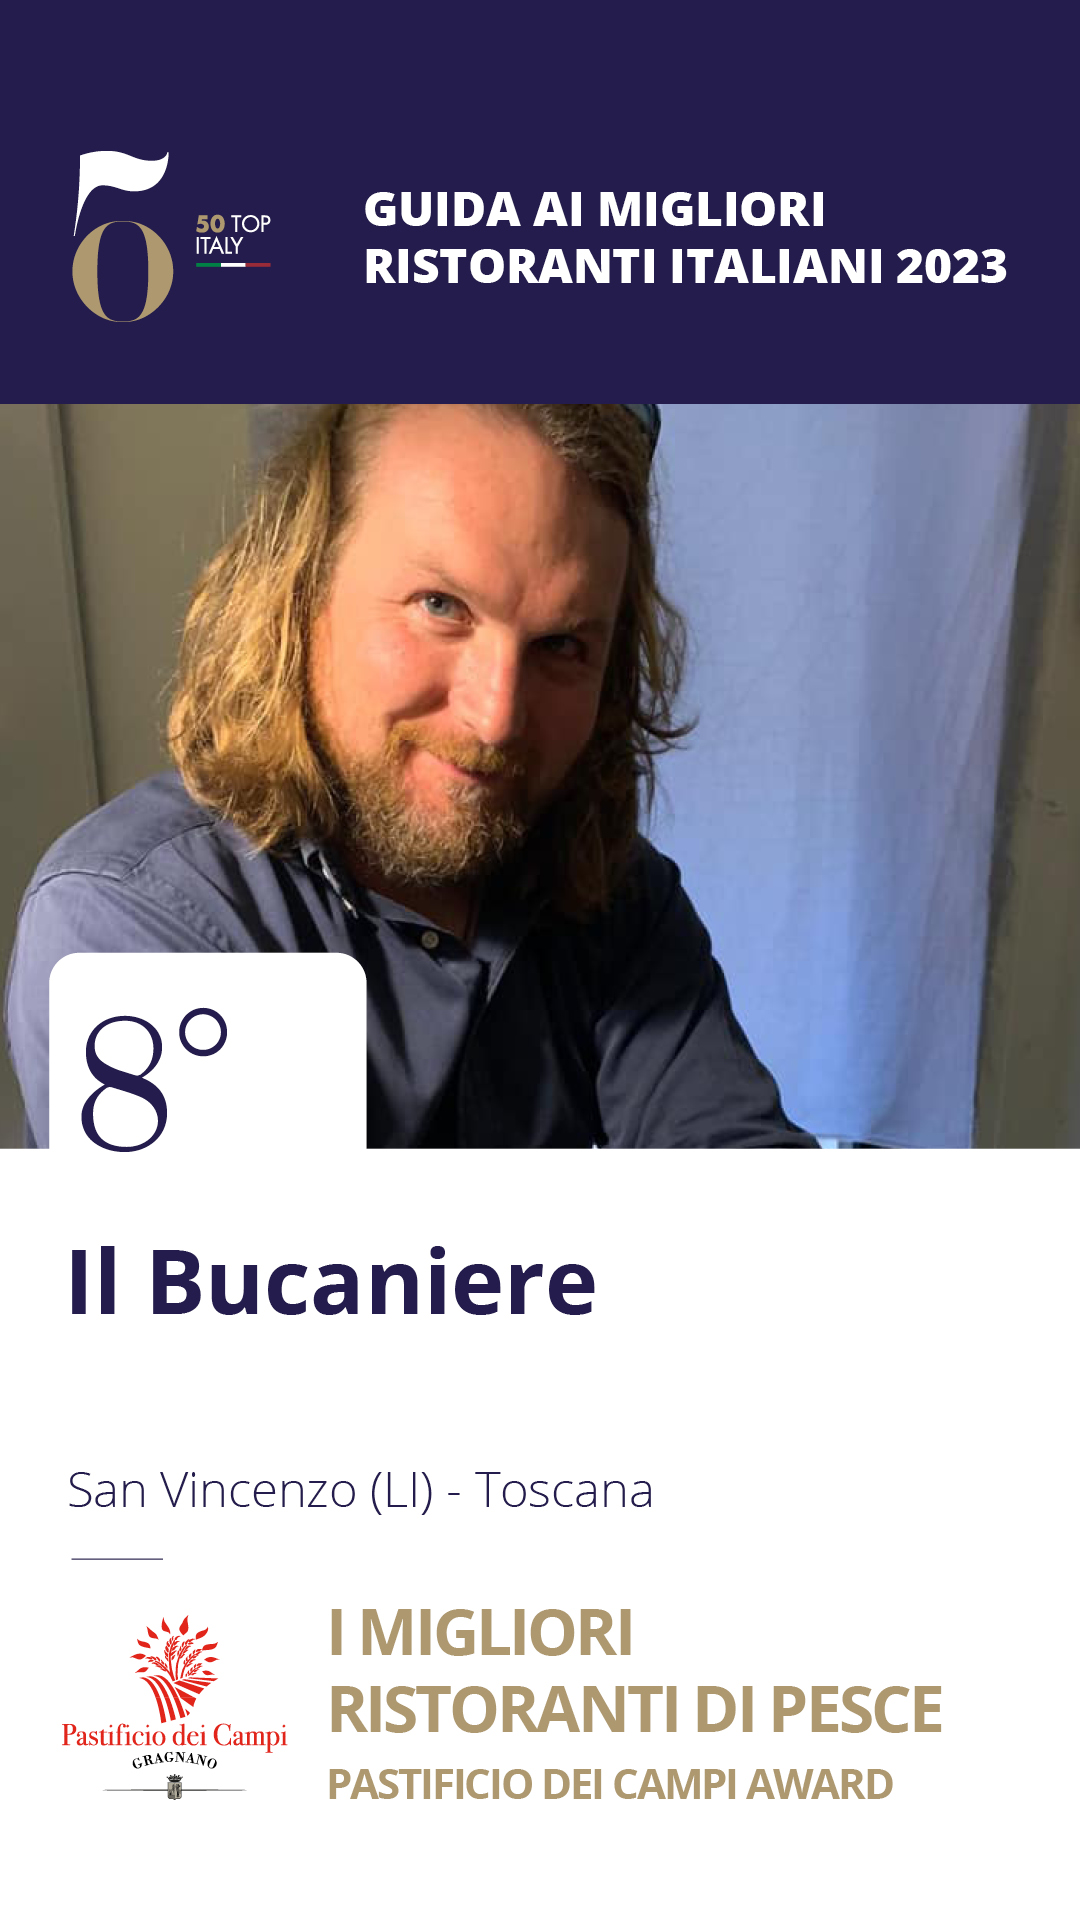 8 - Il Bucaniere - San Vincenzo (LI), Toscana